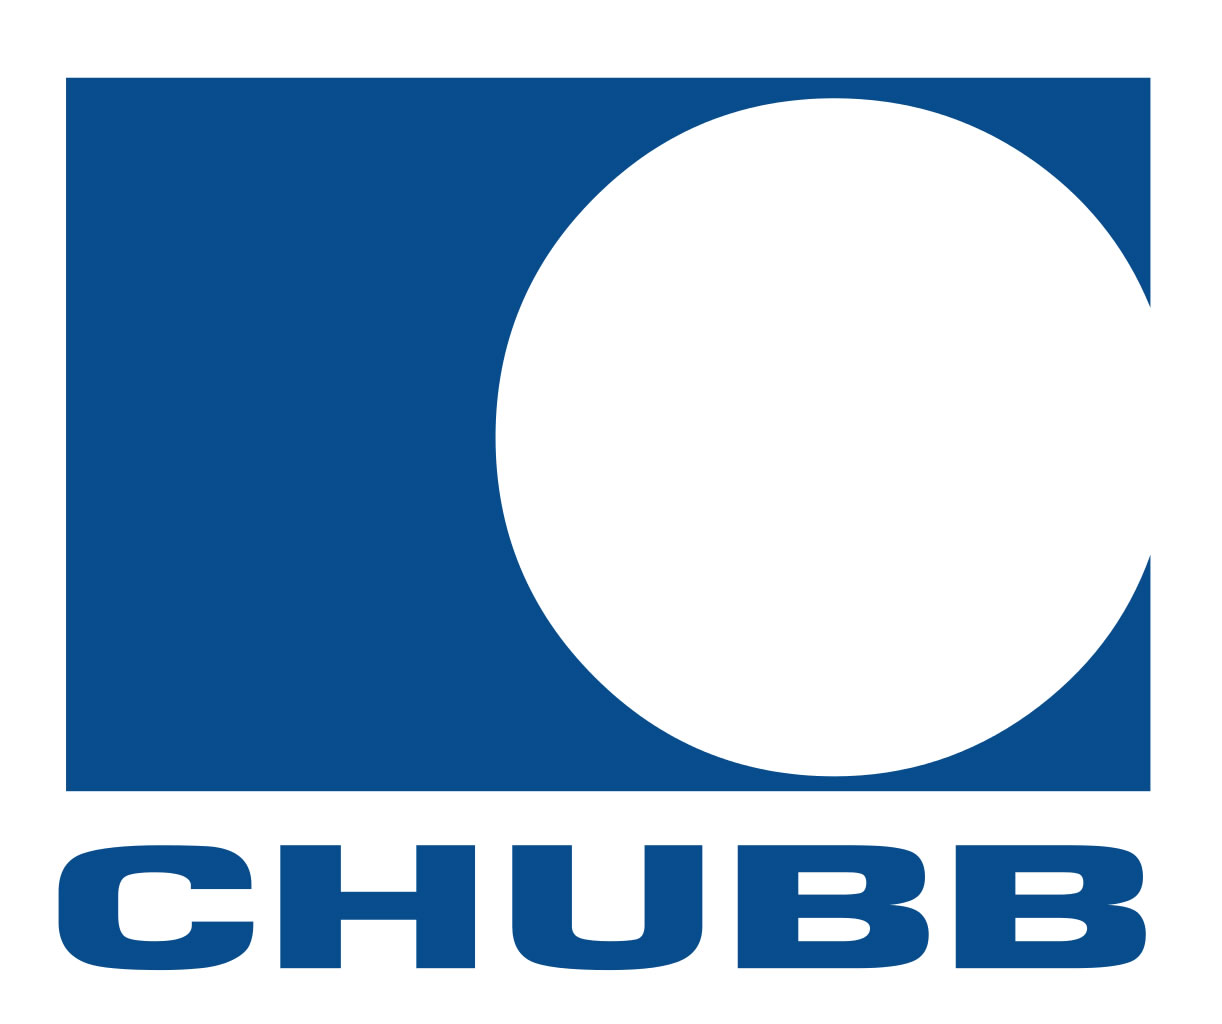 Chubb Corporation logo